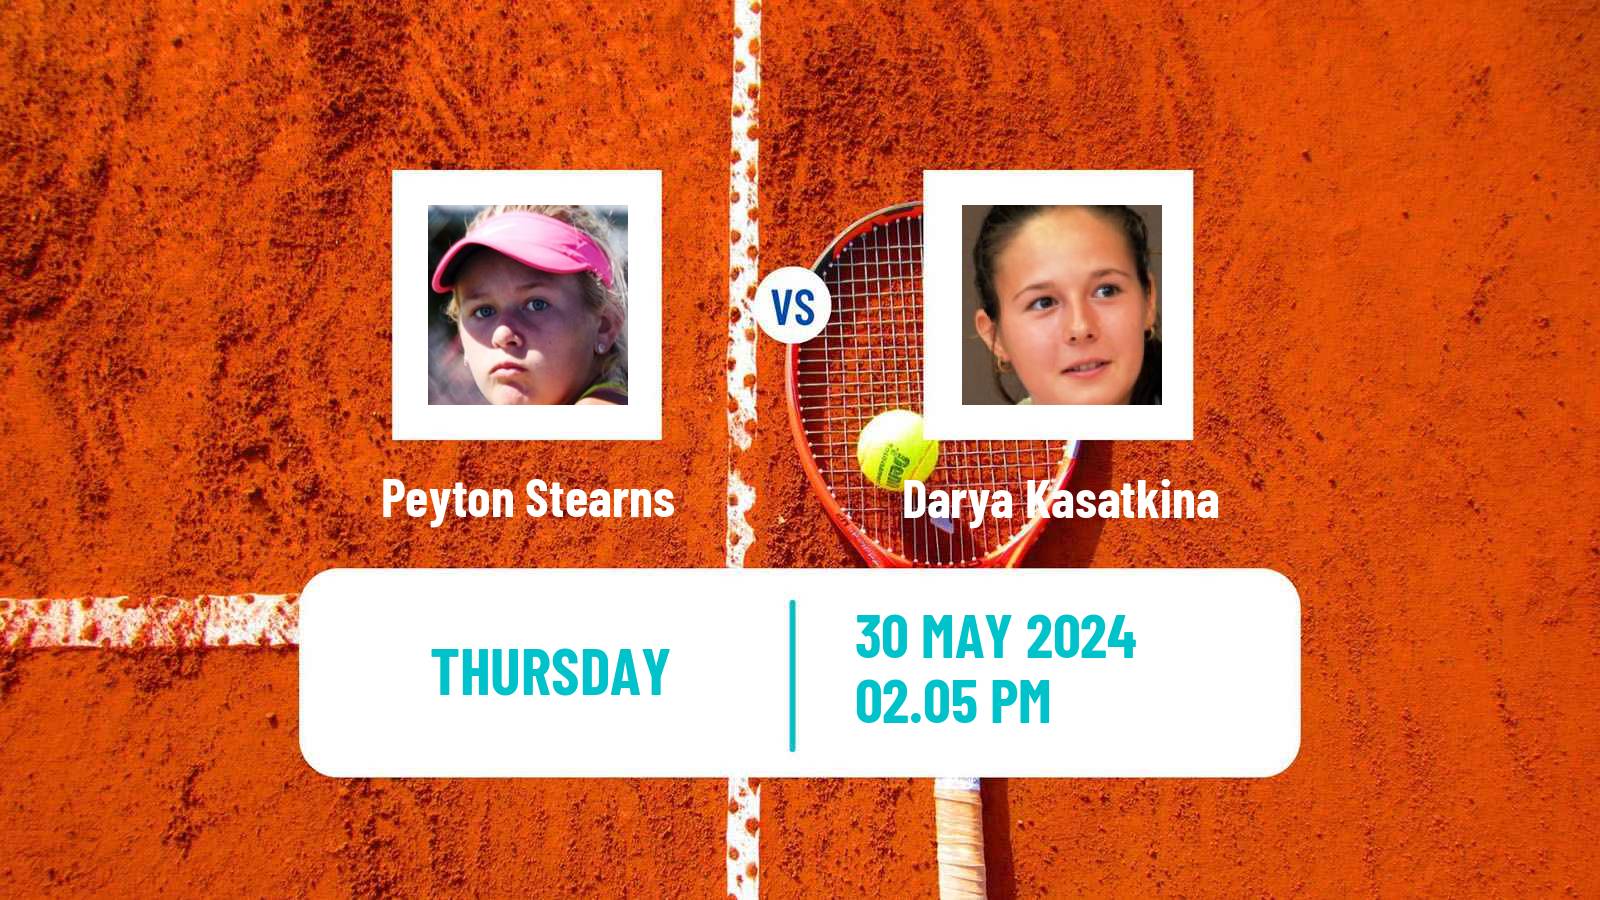 Tennis WTA Roland Garros Peyton Stearns - Darya Kasatkina